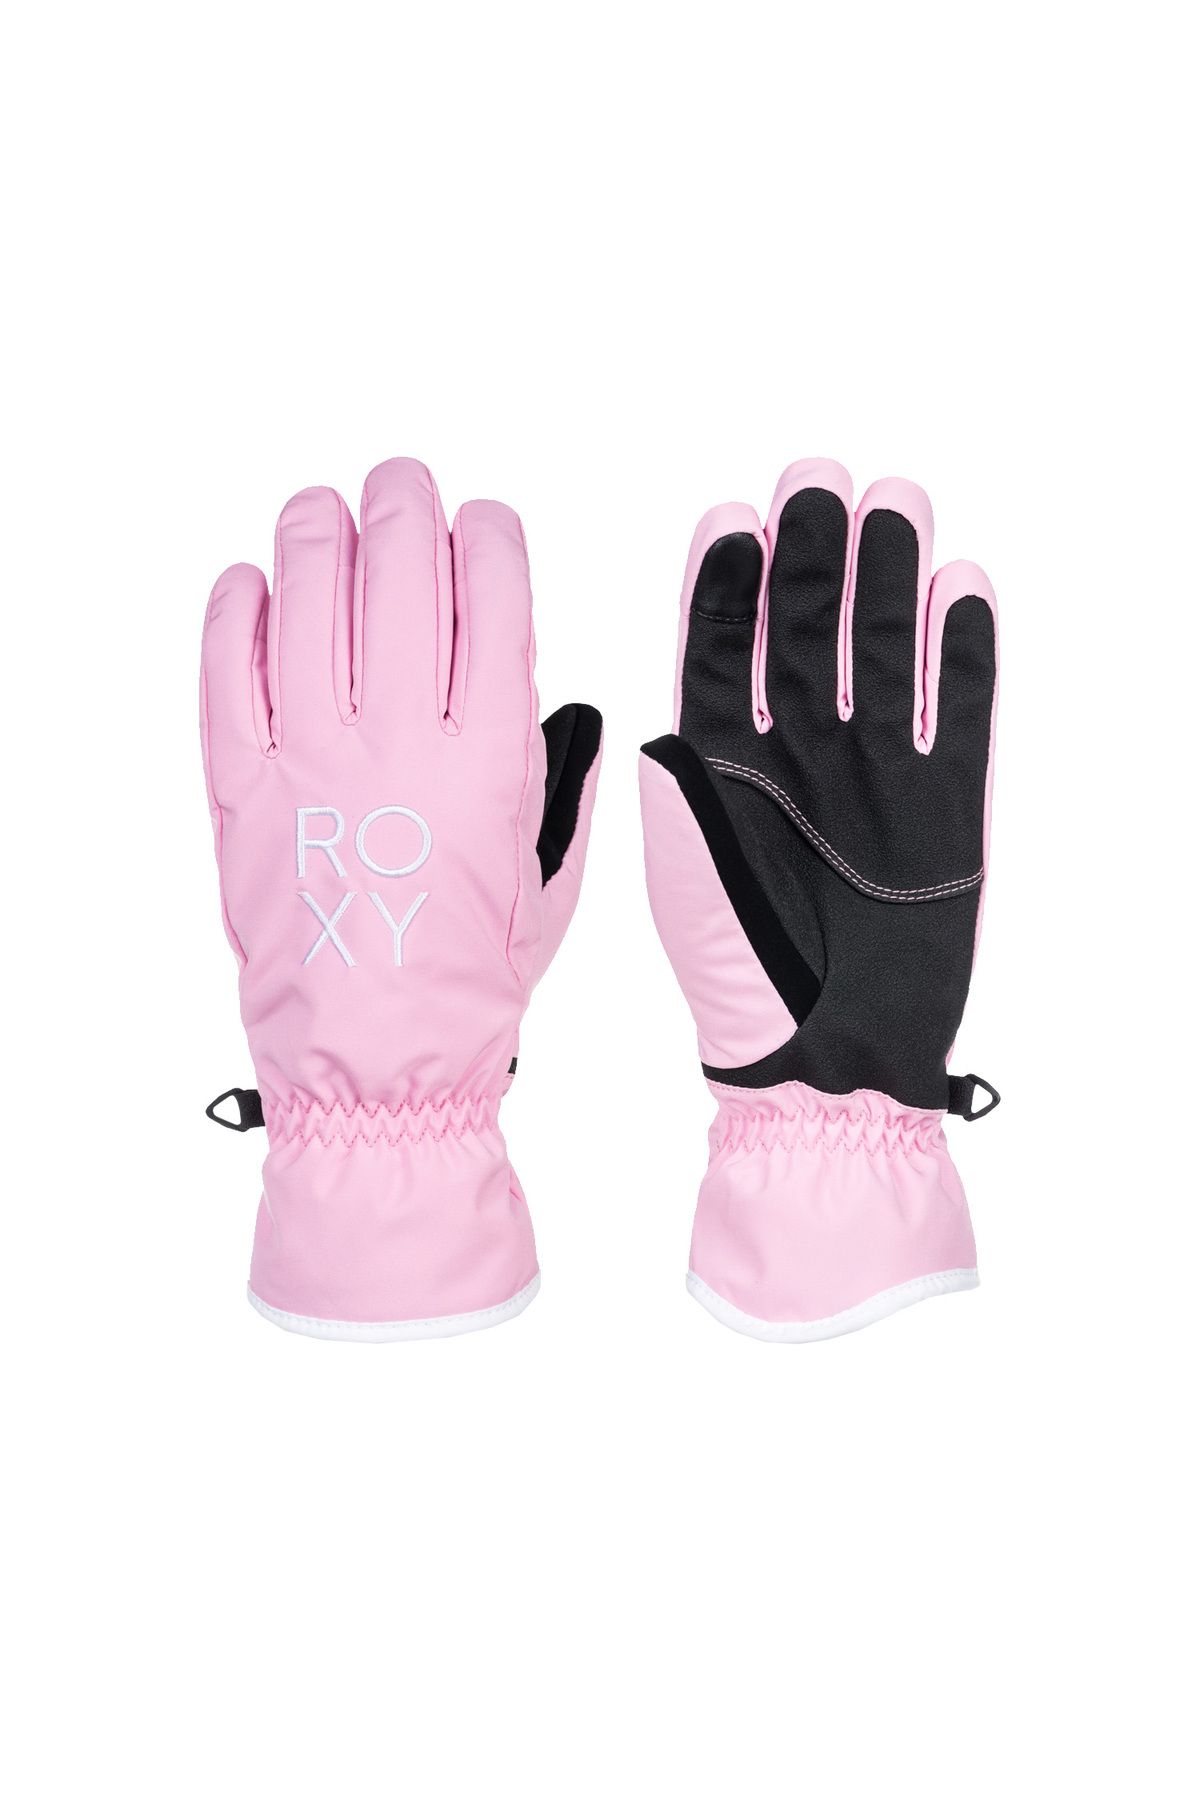 Roxy Freshfıeld Gloves